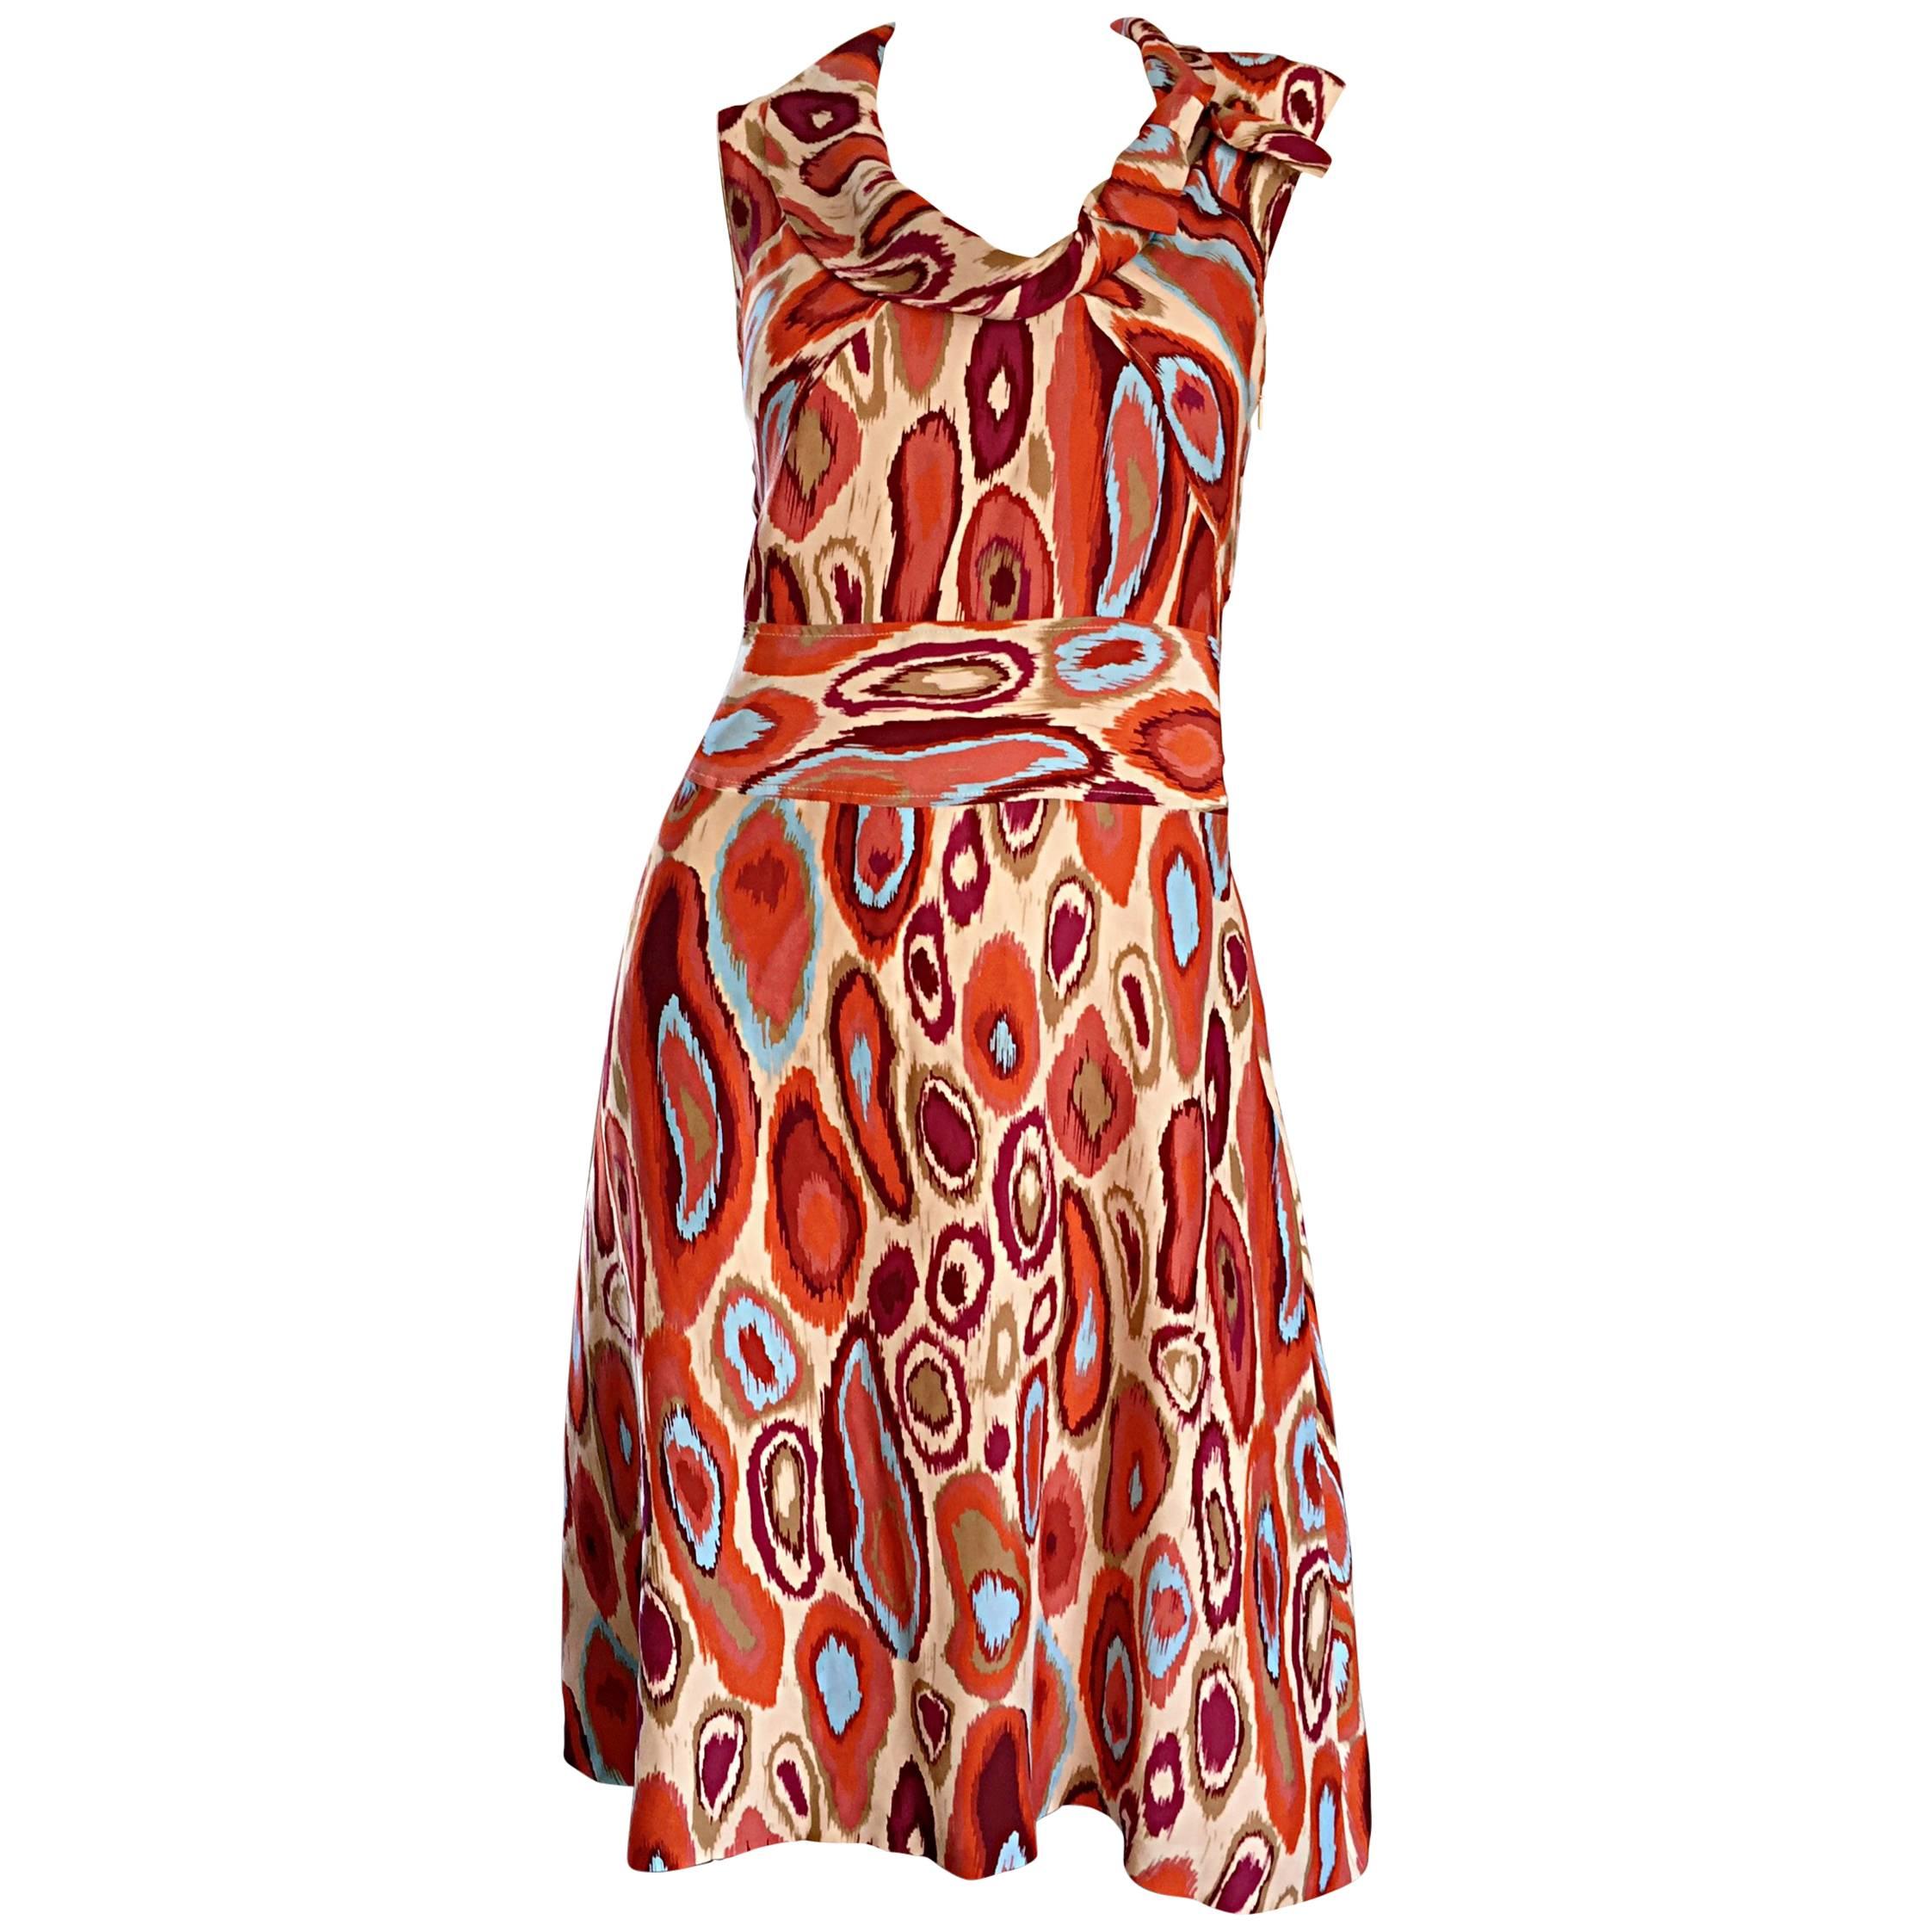 NWT Cacharel Silk Ikat Print Dress Chic 1960s 60s Style 